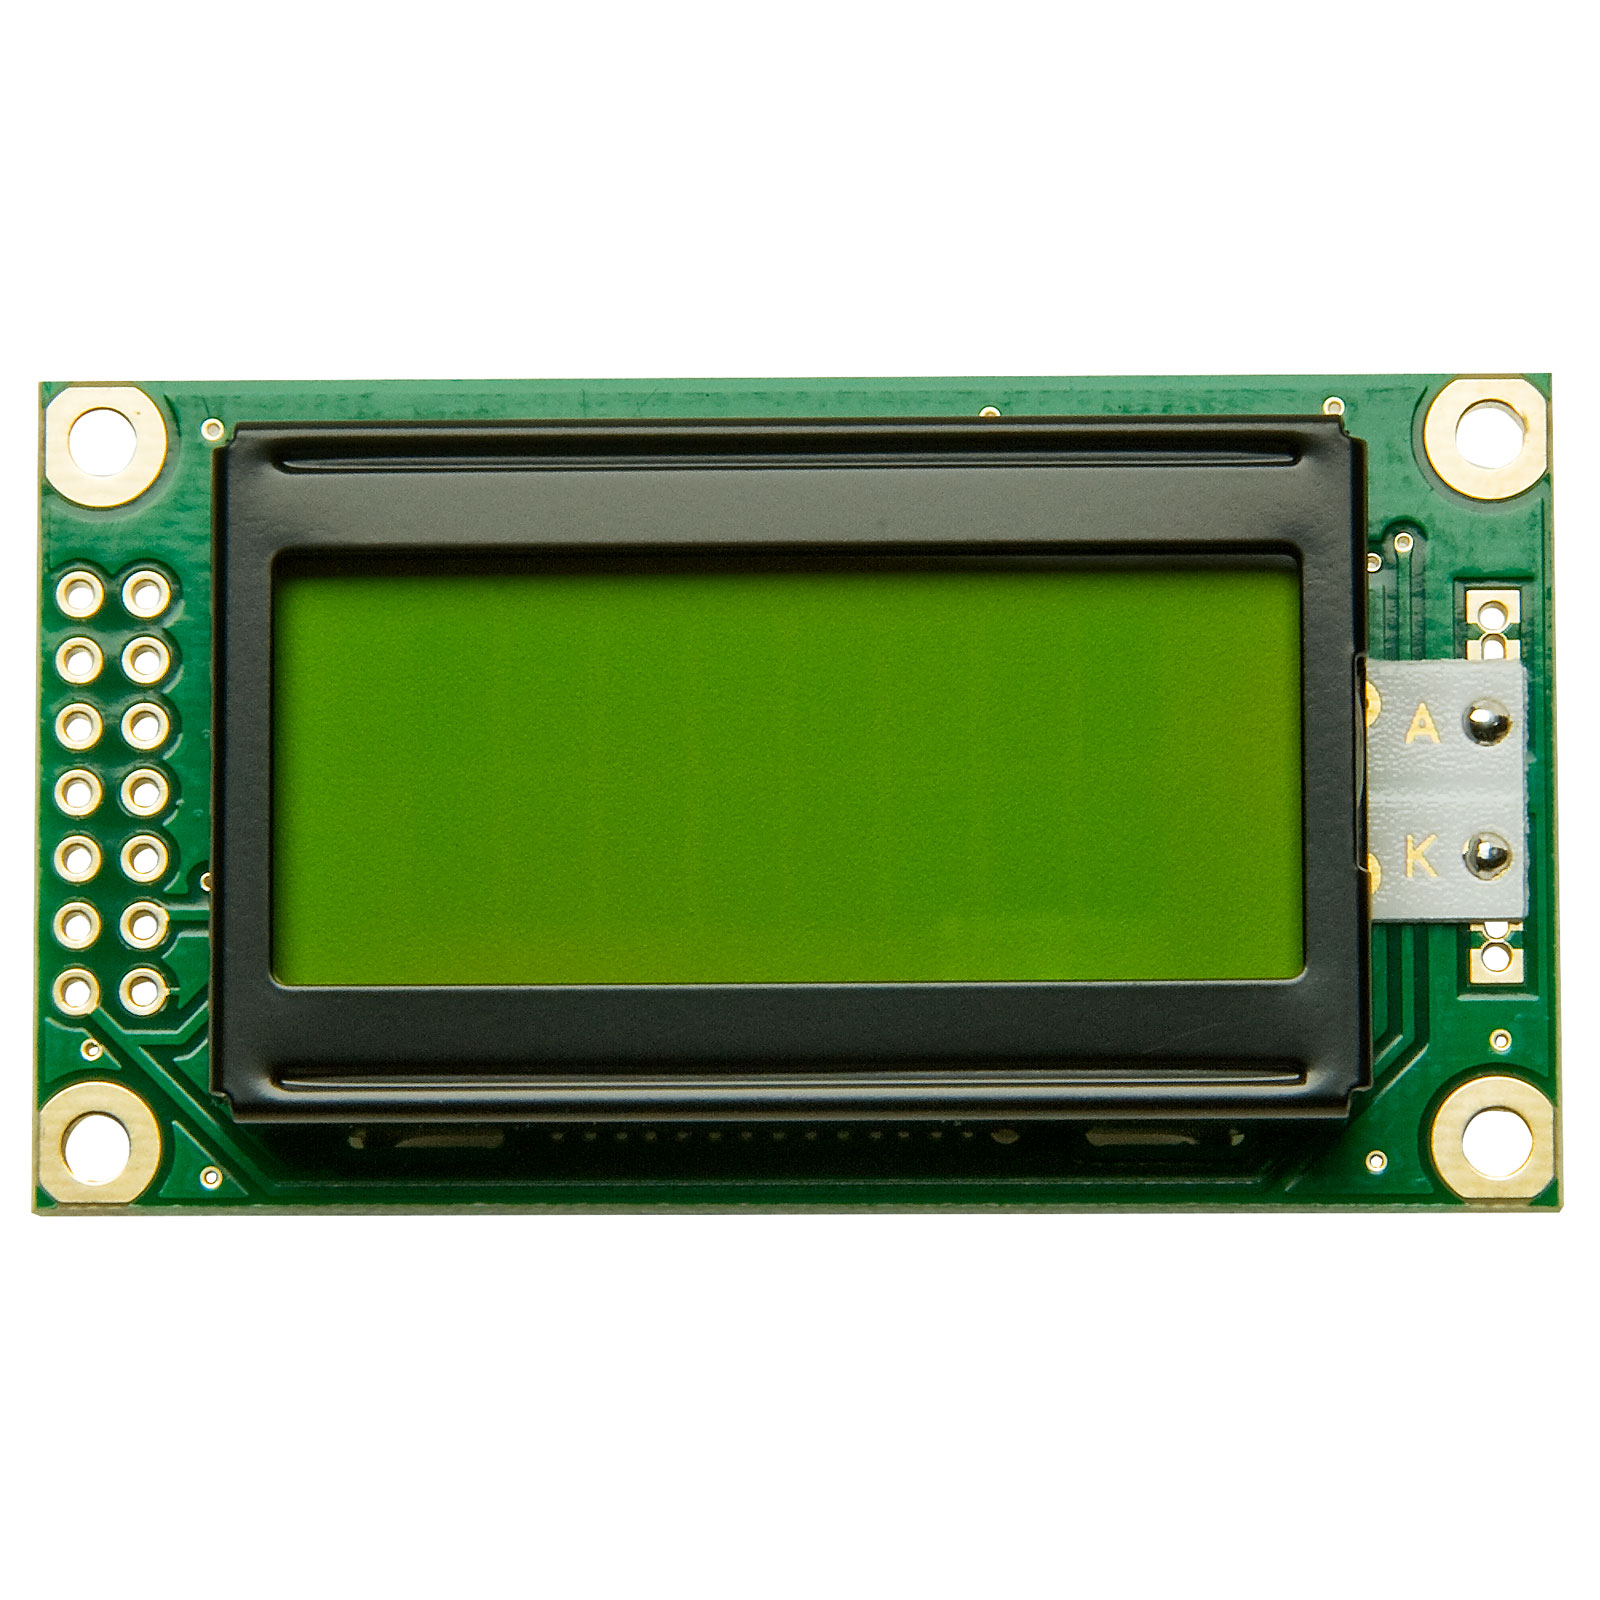 8x2 Character LCD, 8x2 LCD Display, 8x2 LCD Module - WINSTAR